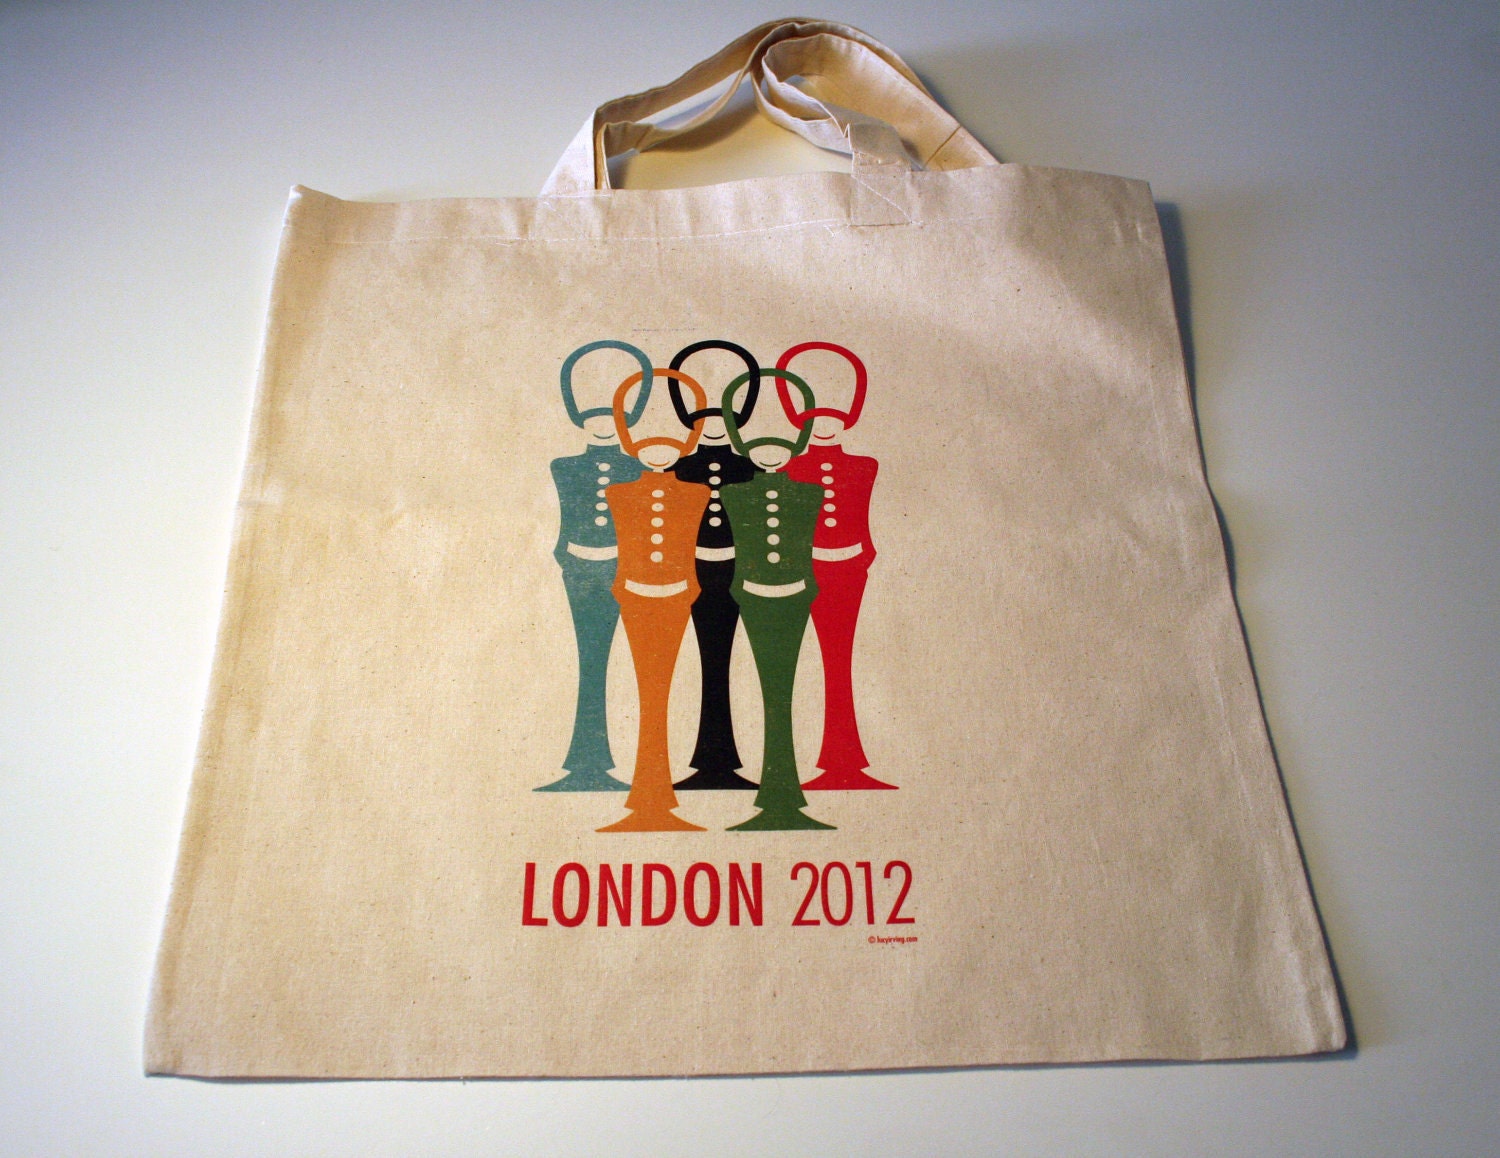 London Olympics 2012 Illustrated Canvas Bag